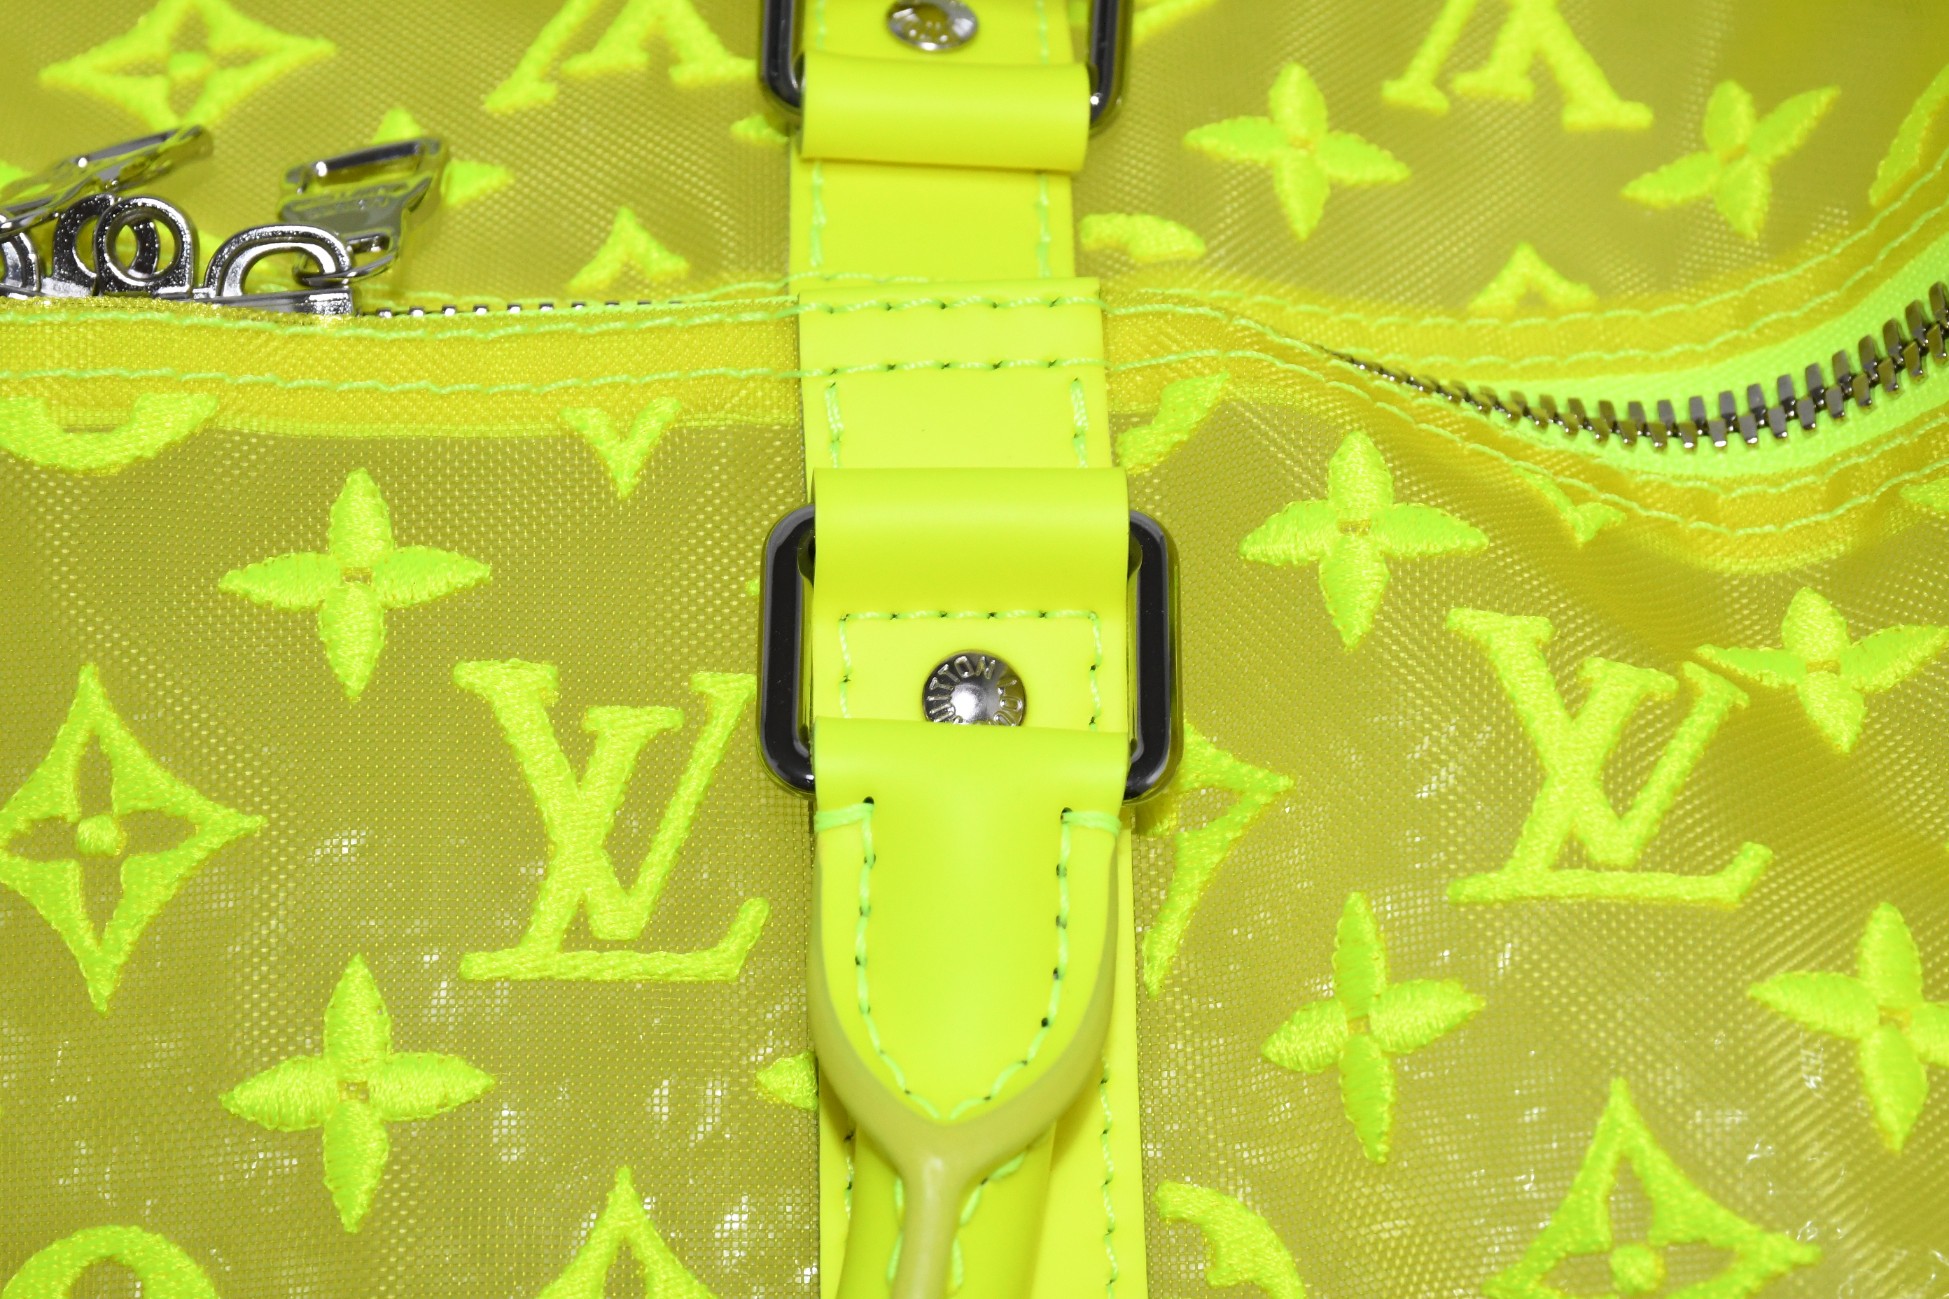 Louis Vuitton Neon Yellow Keepall Bandouliere 50